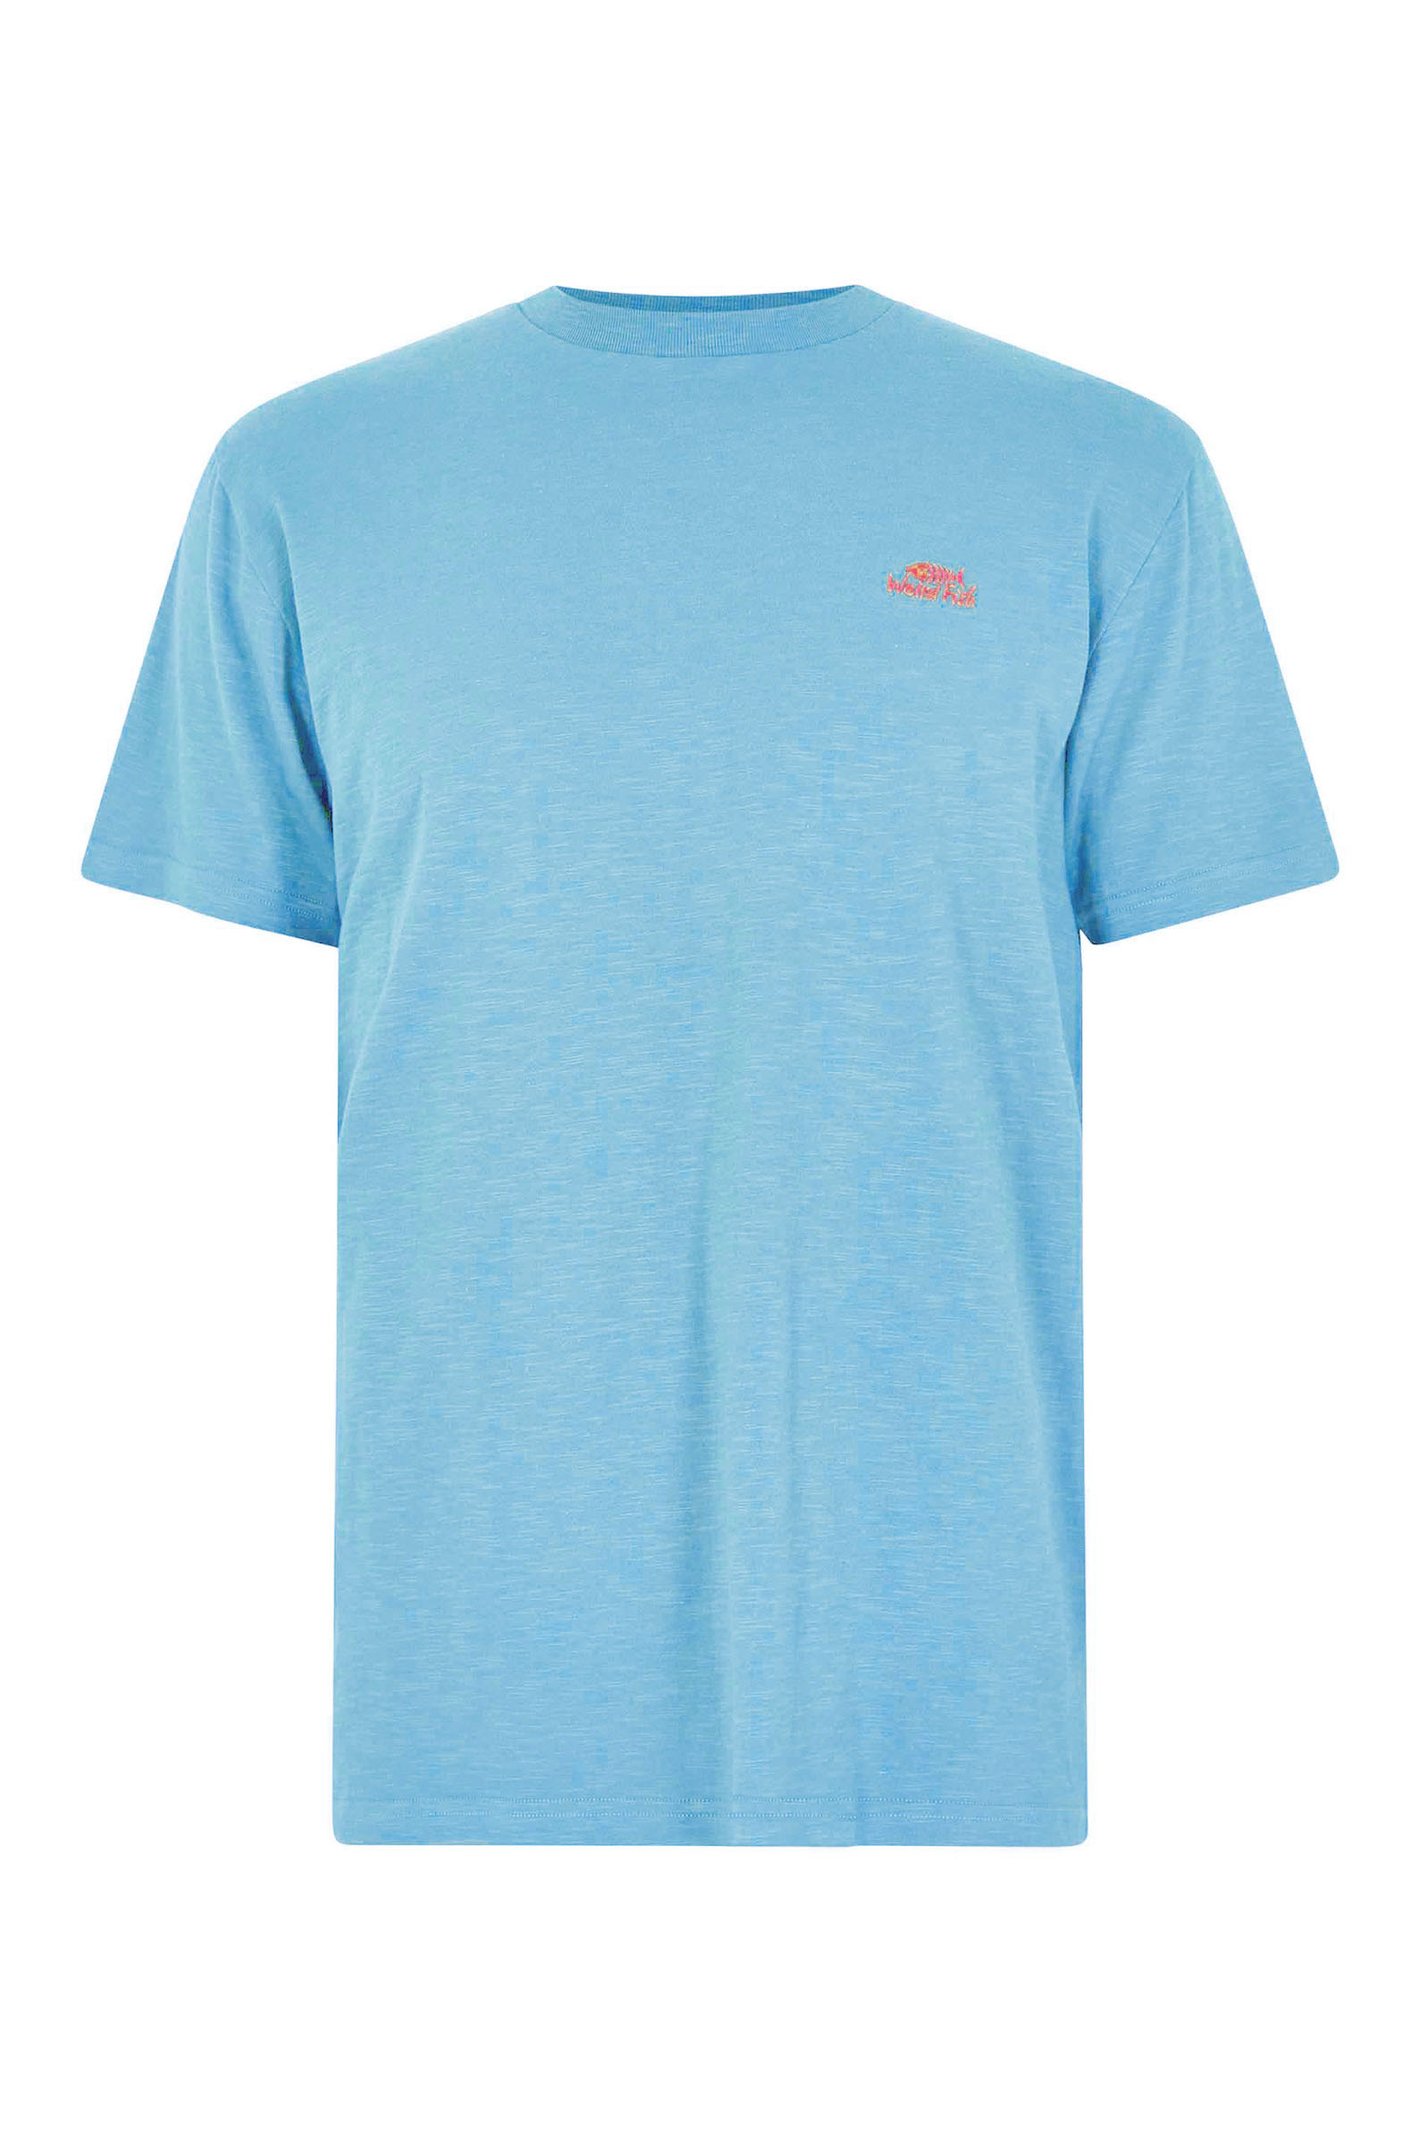 Weird Fish Fished Organic Cotton T-Shirt Sky Blue Size 4XL